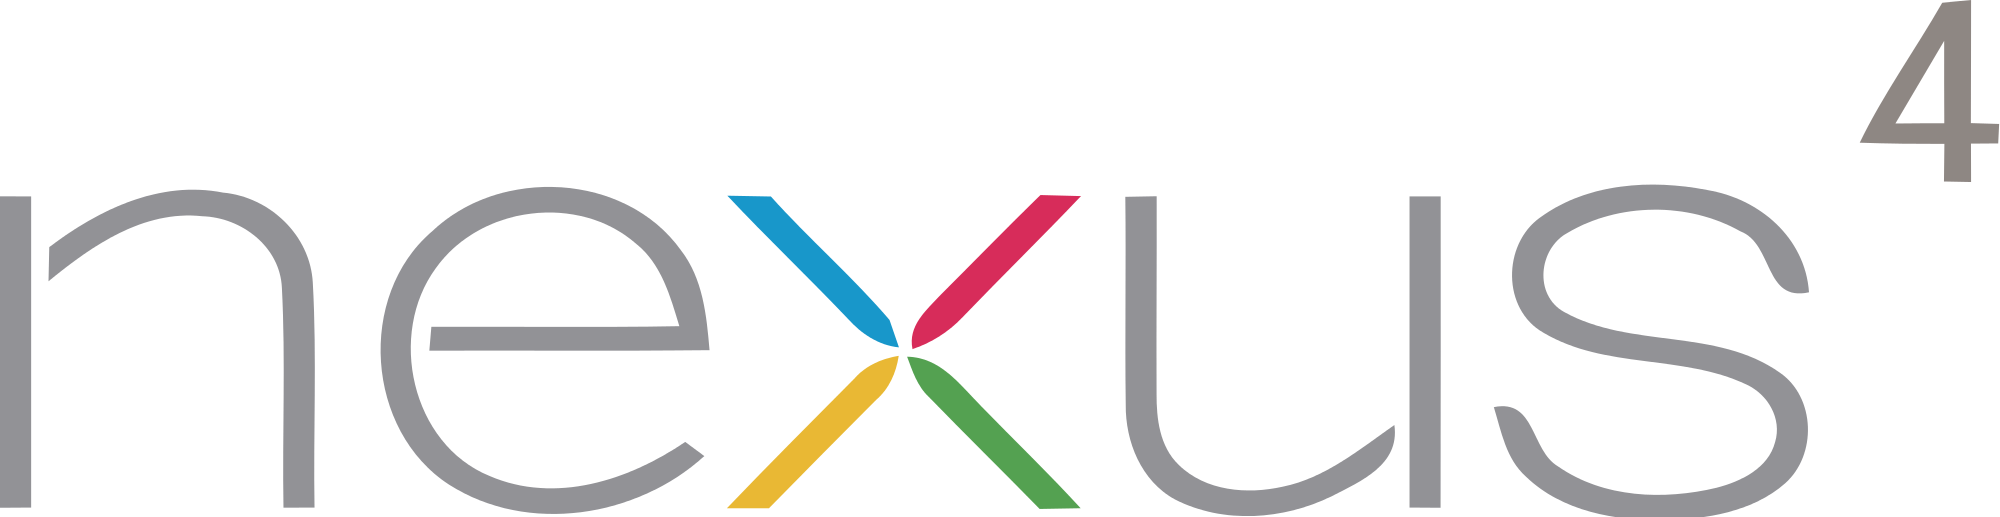 Lg Nexus 5 Logo (2000x517)